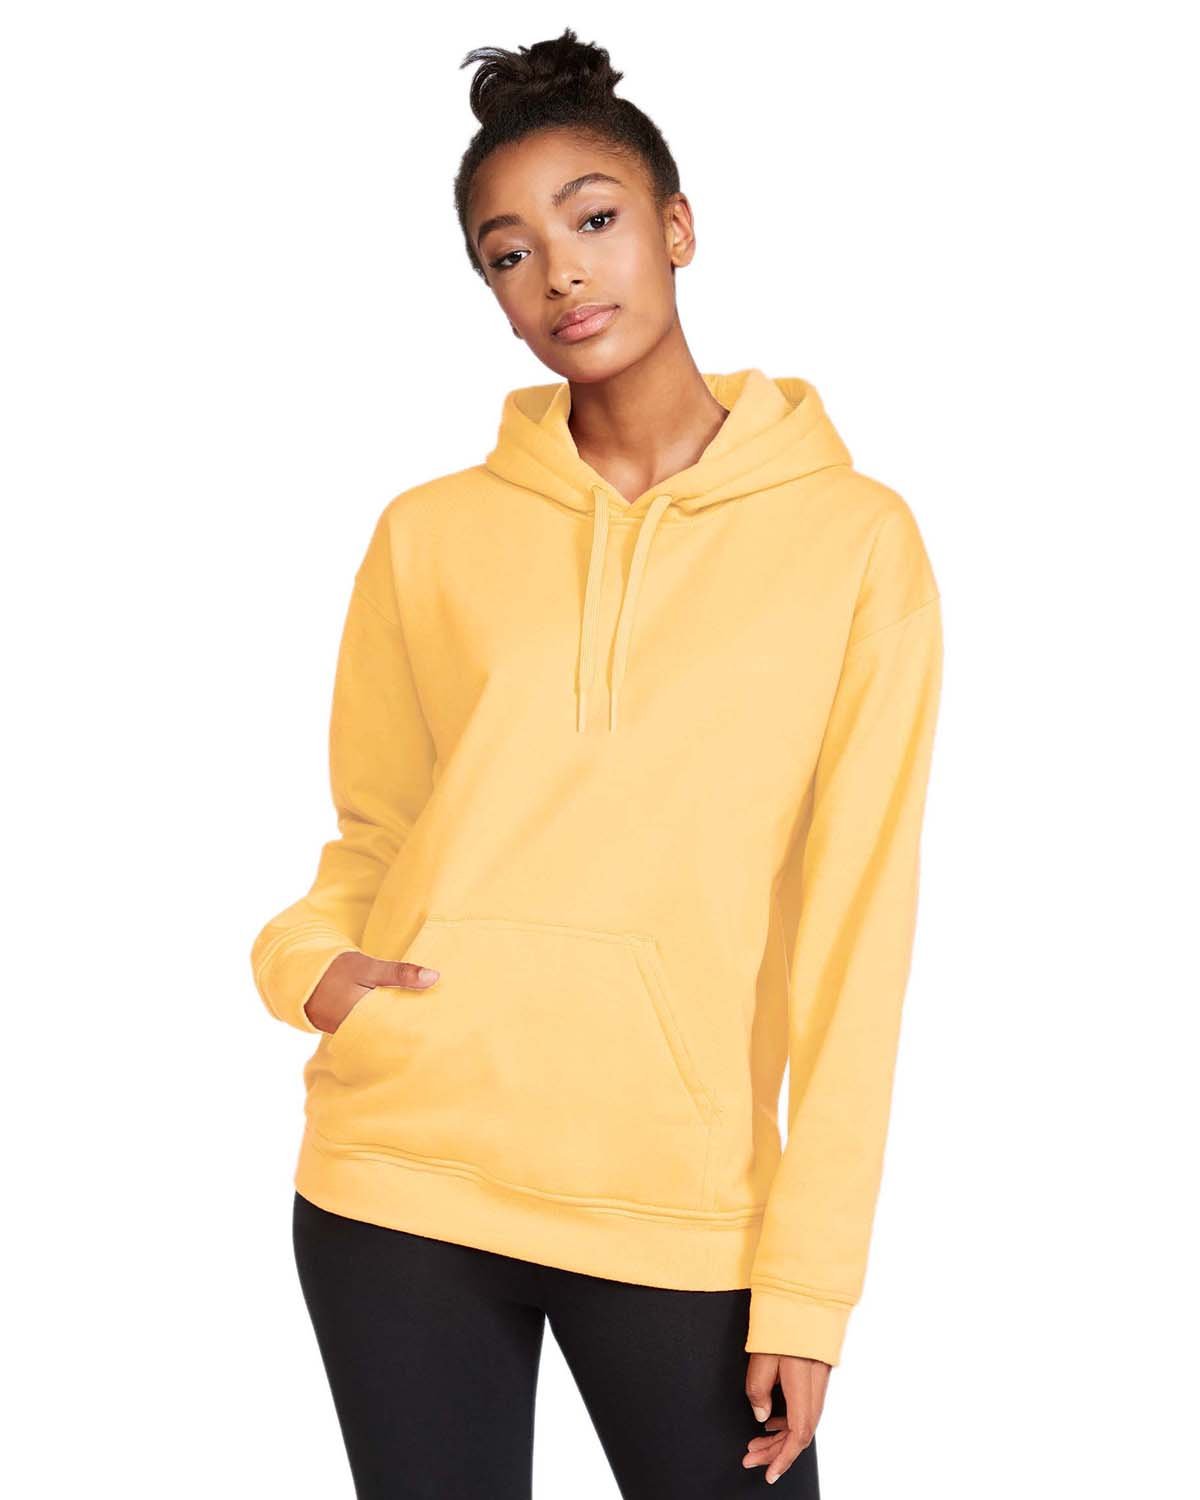 Gildan Softstyle Pullover Hooded Sweatshirt, Product